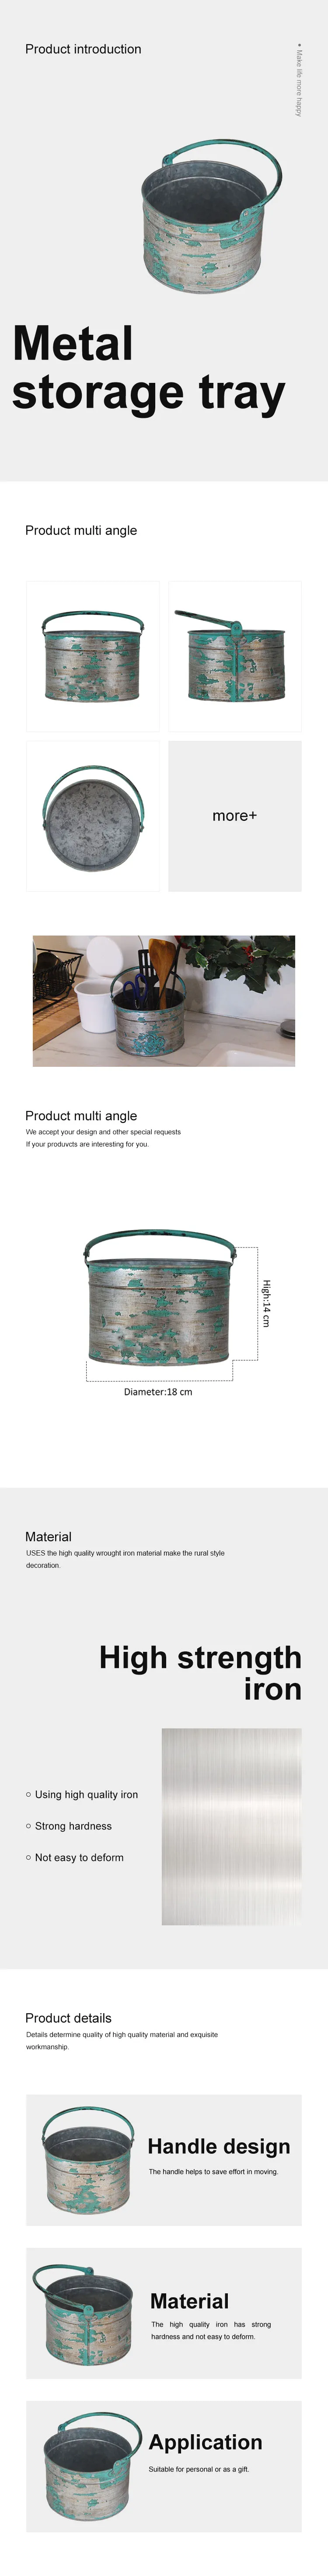 Galvanized storage bucket,Organizer Tray,Metal bucket planter with handle